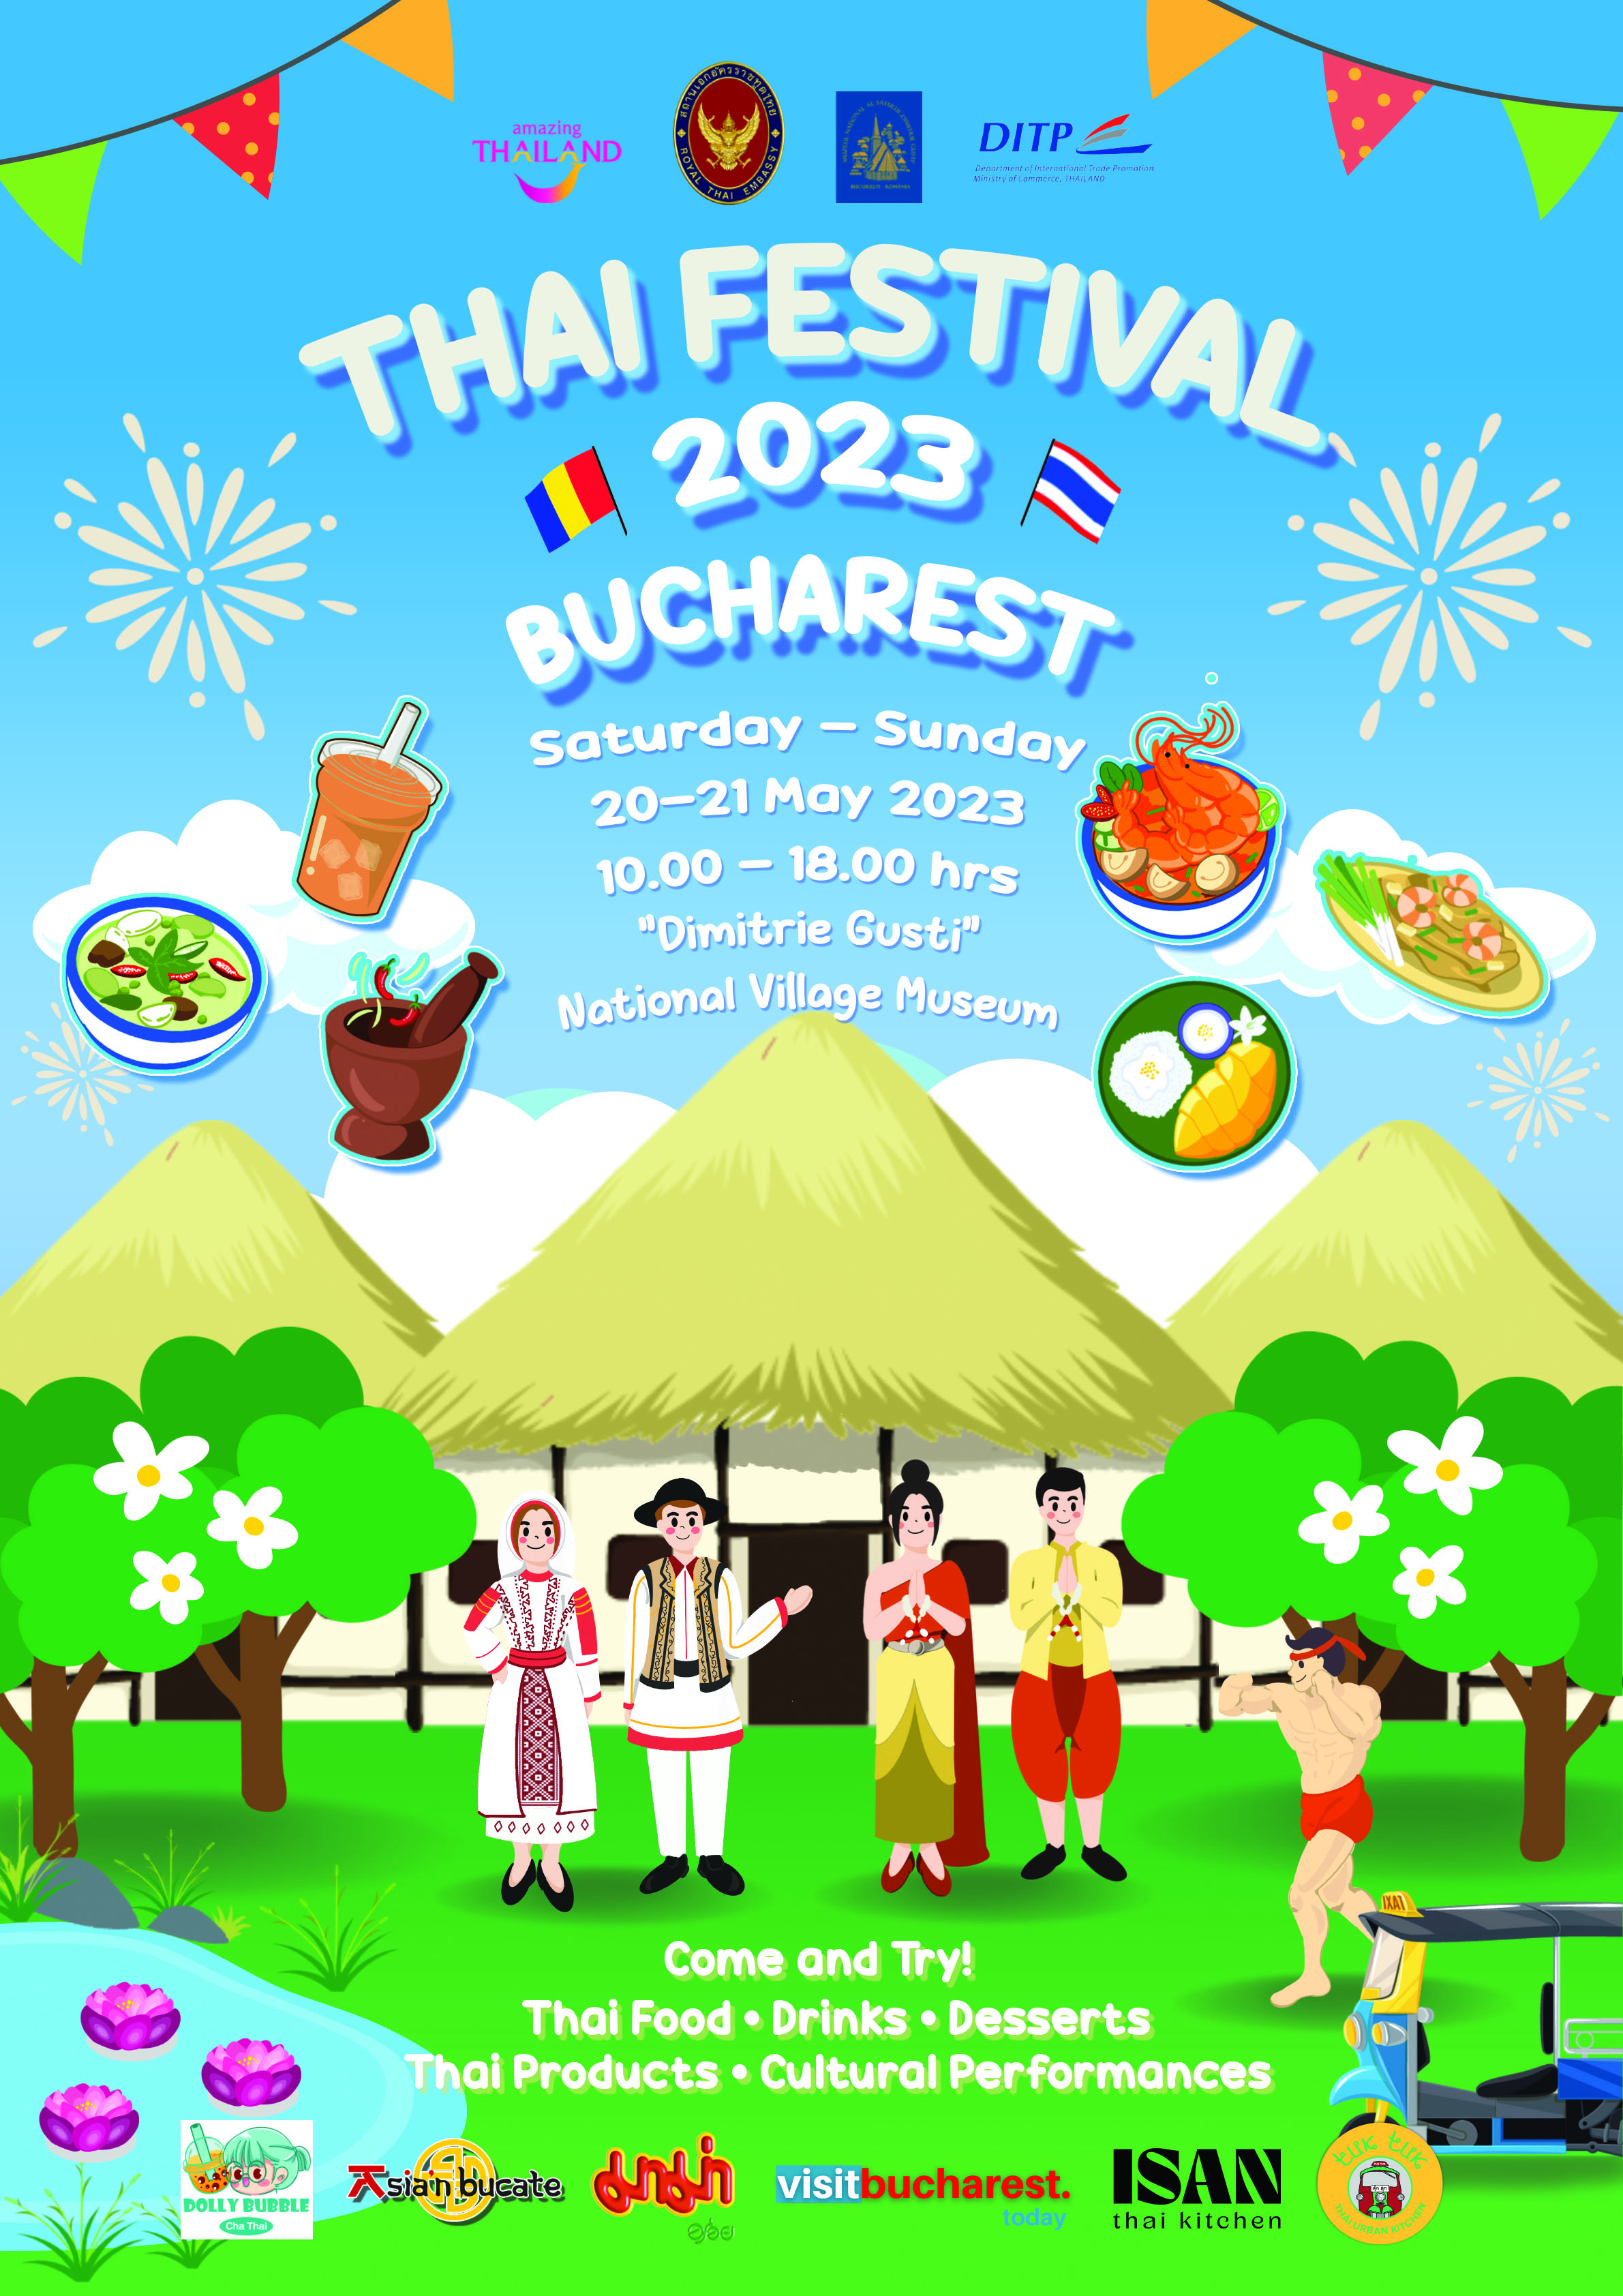 Thai Festival 2023 brings a taste of Thailand to Romania Romania Insider